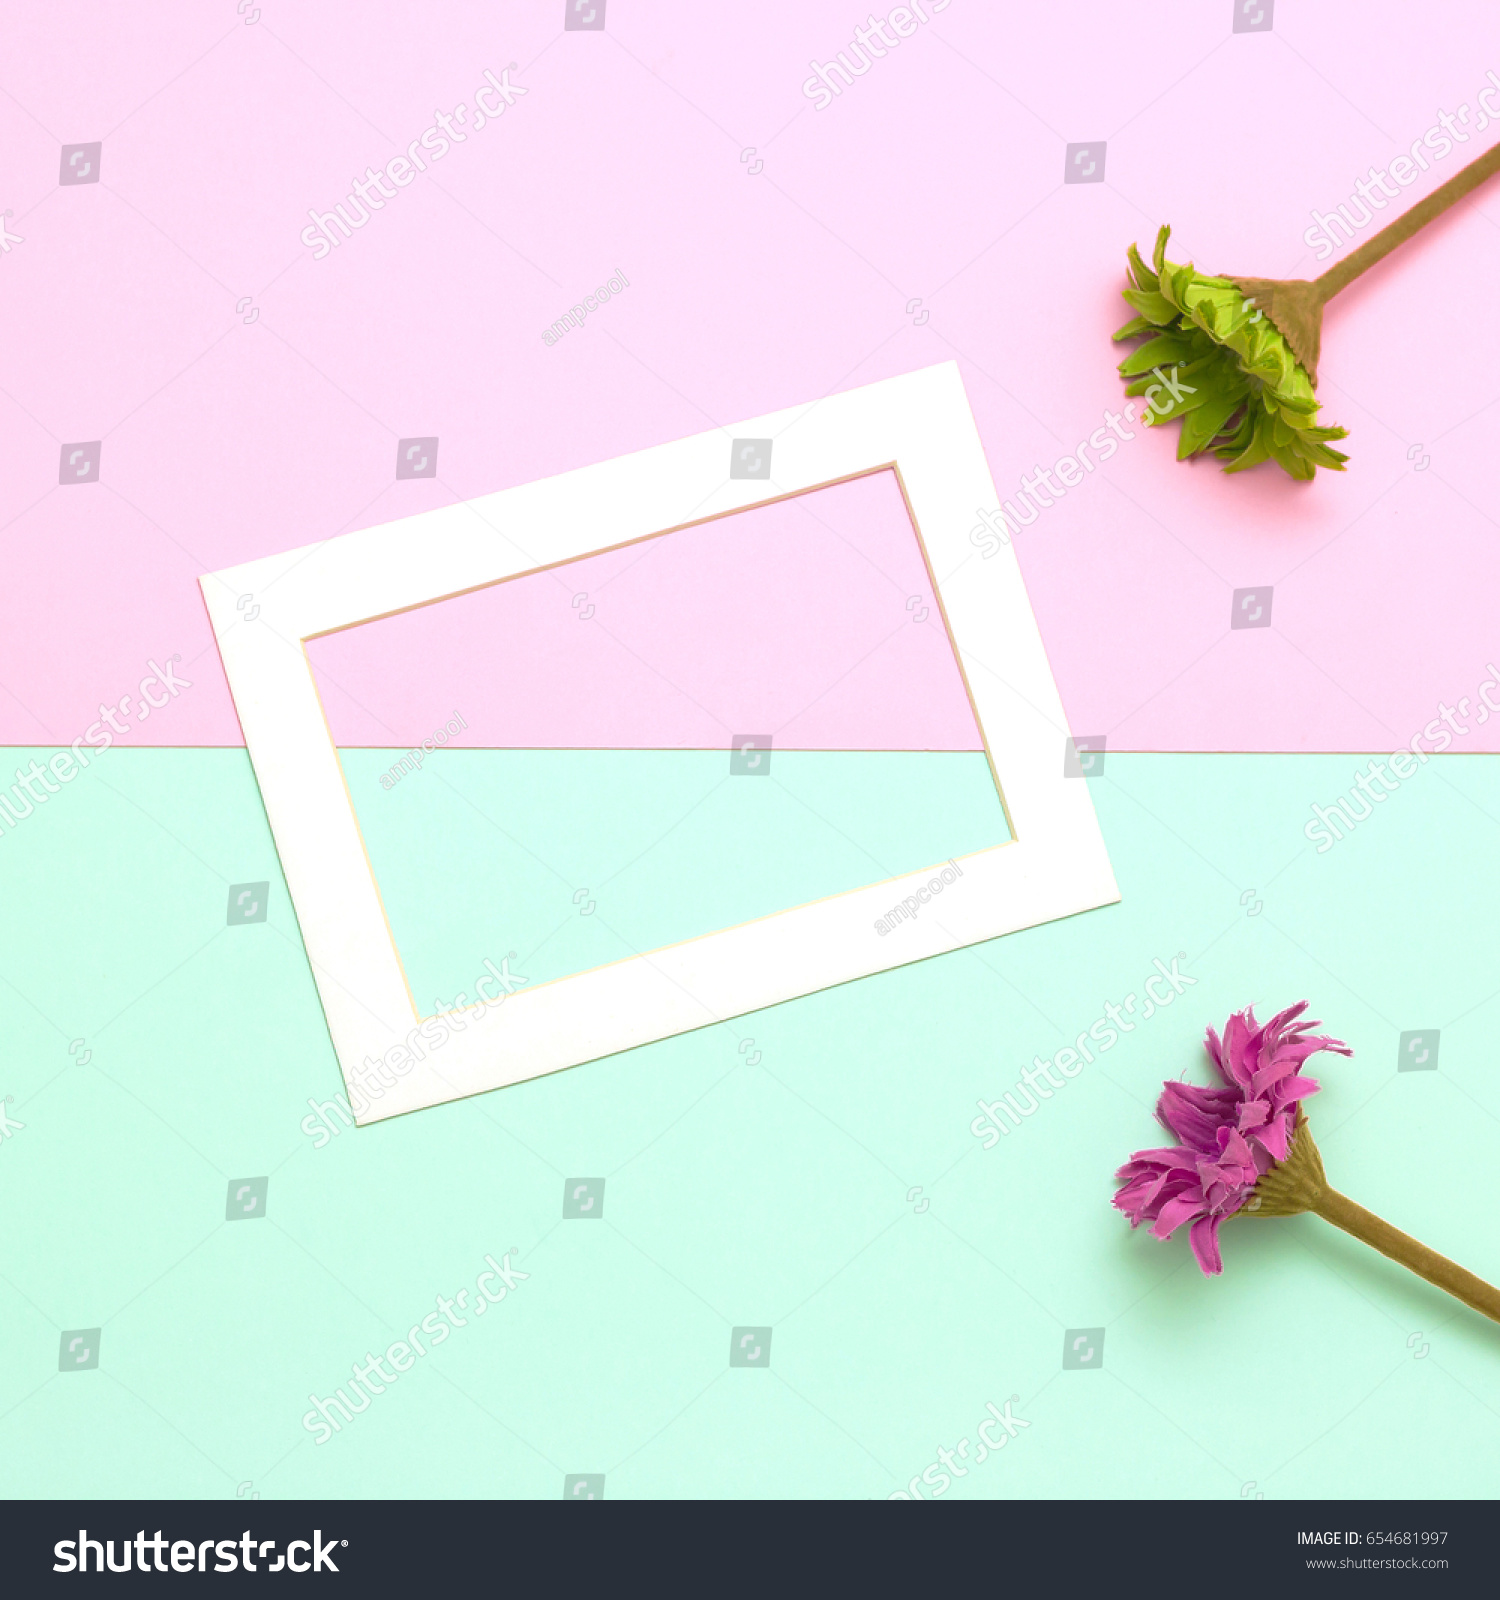 Empty Frame Flowers Flat Lay On Stock Photo 654681997 - Shutterstock